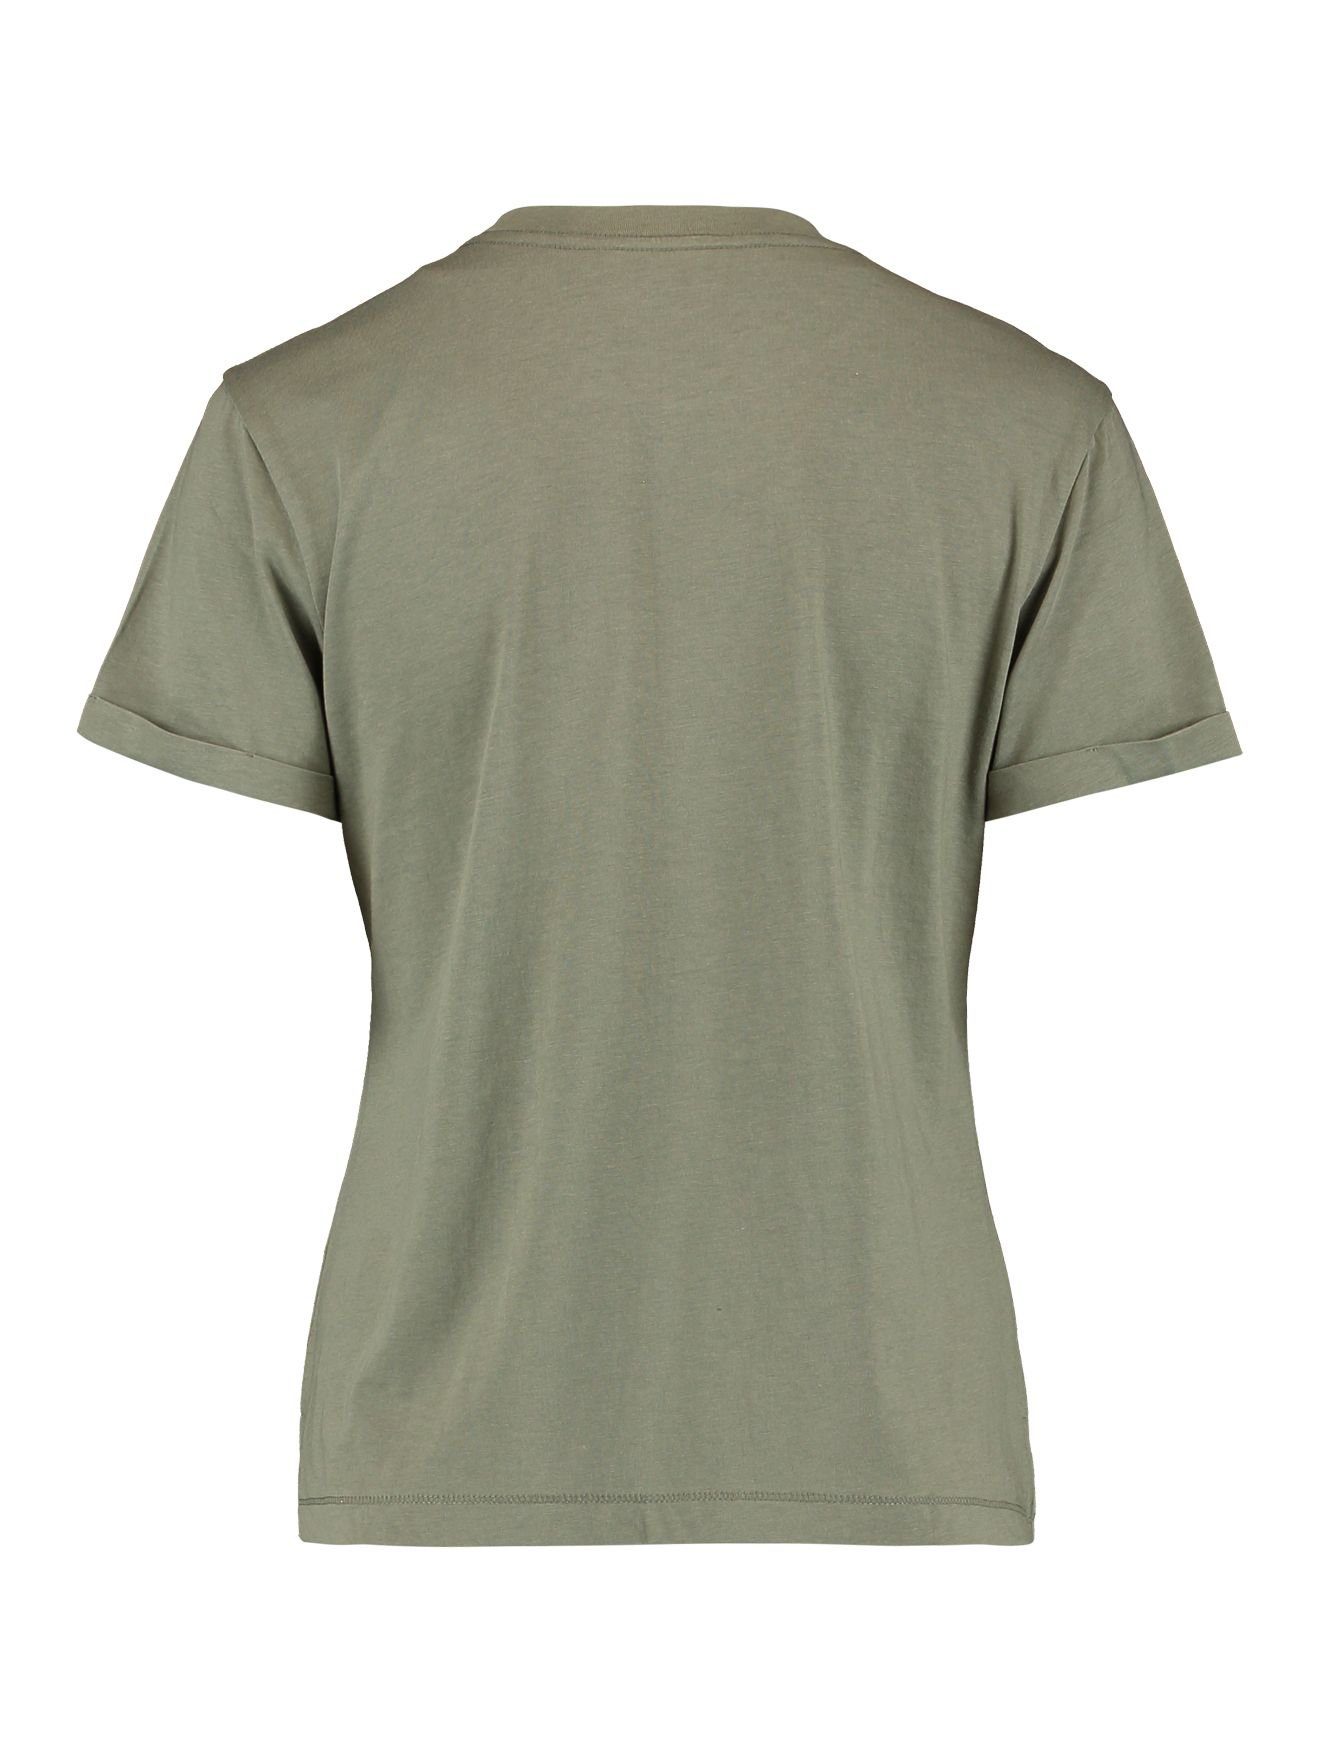 T-Shirt Shirt ZABAIONE green Ma44delaine